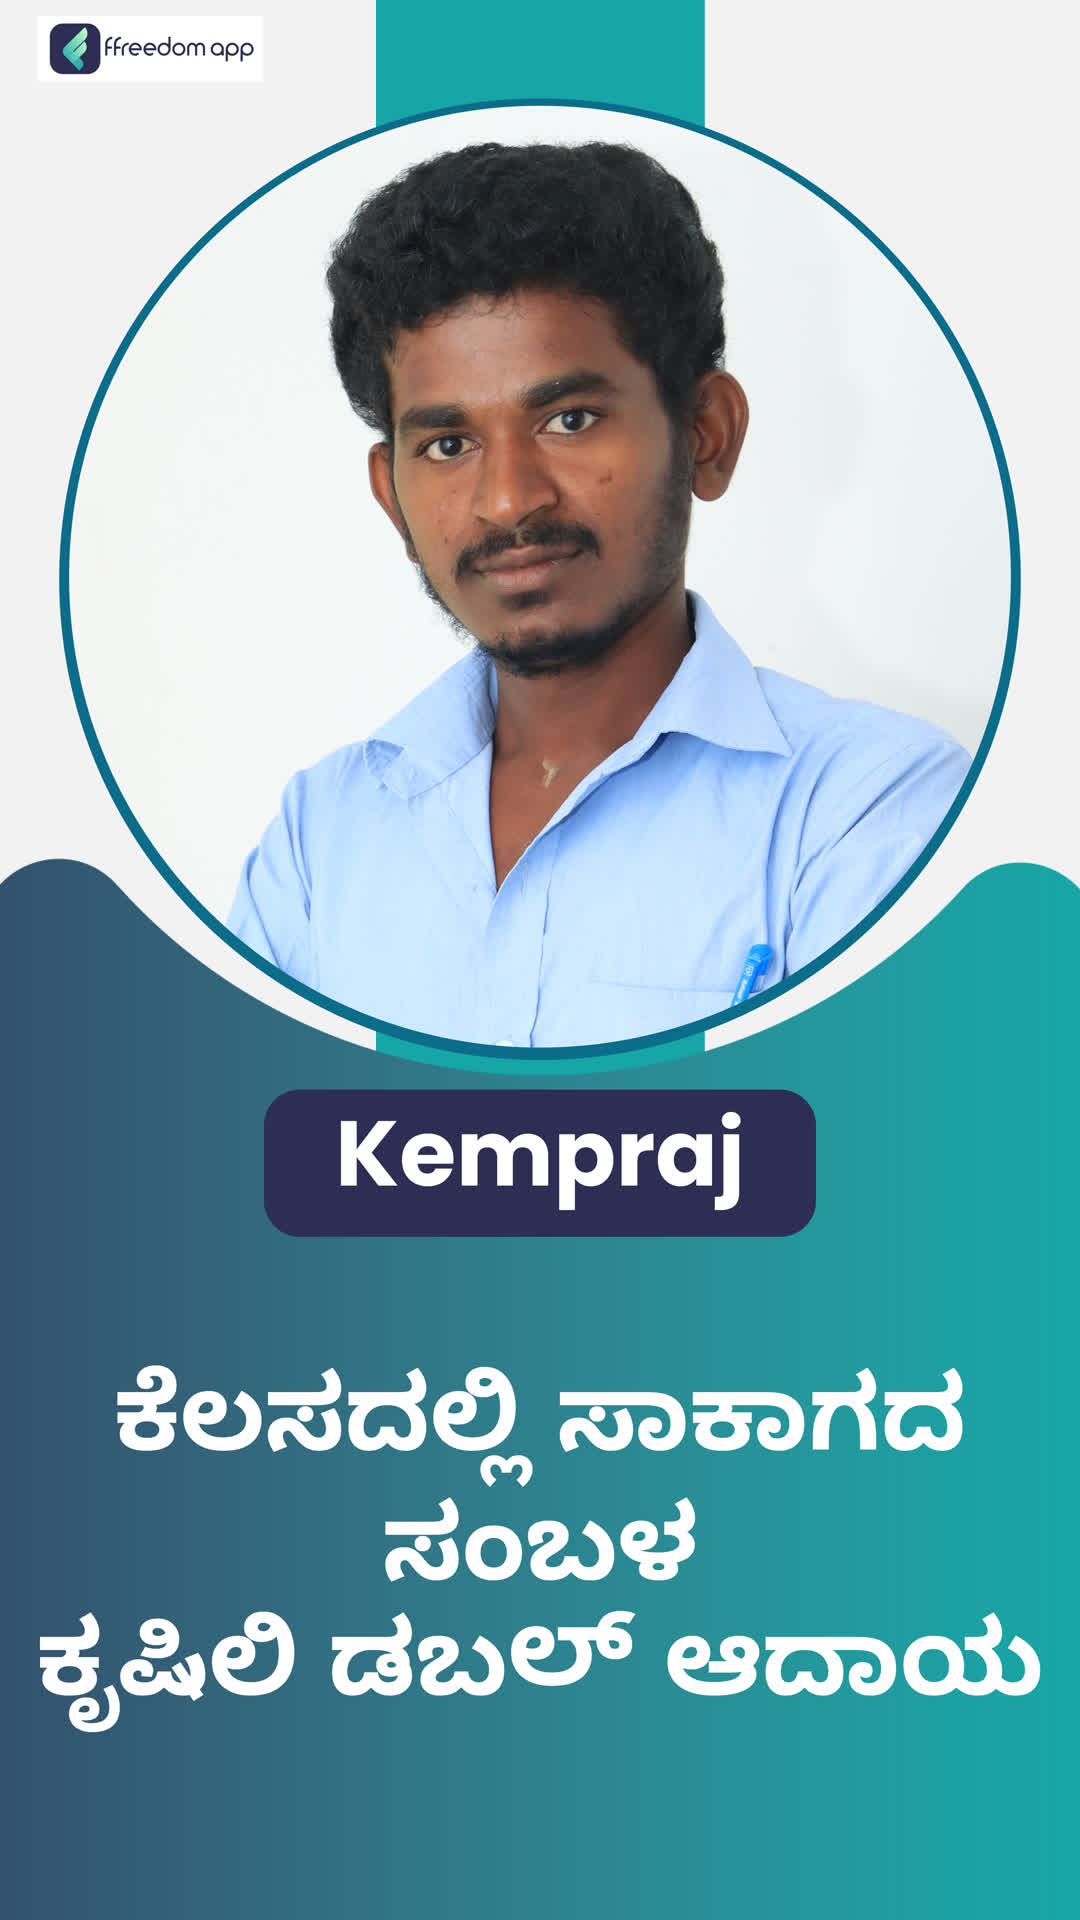 Kemparaju's Honest Review of ffreedom app - Chikballapur ,Karnataka